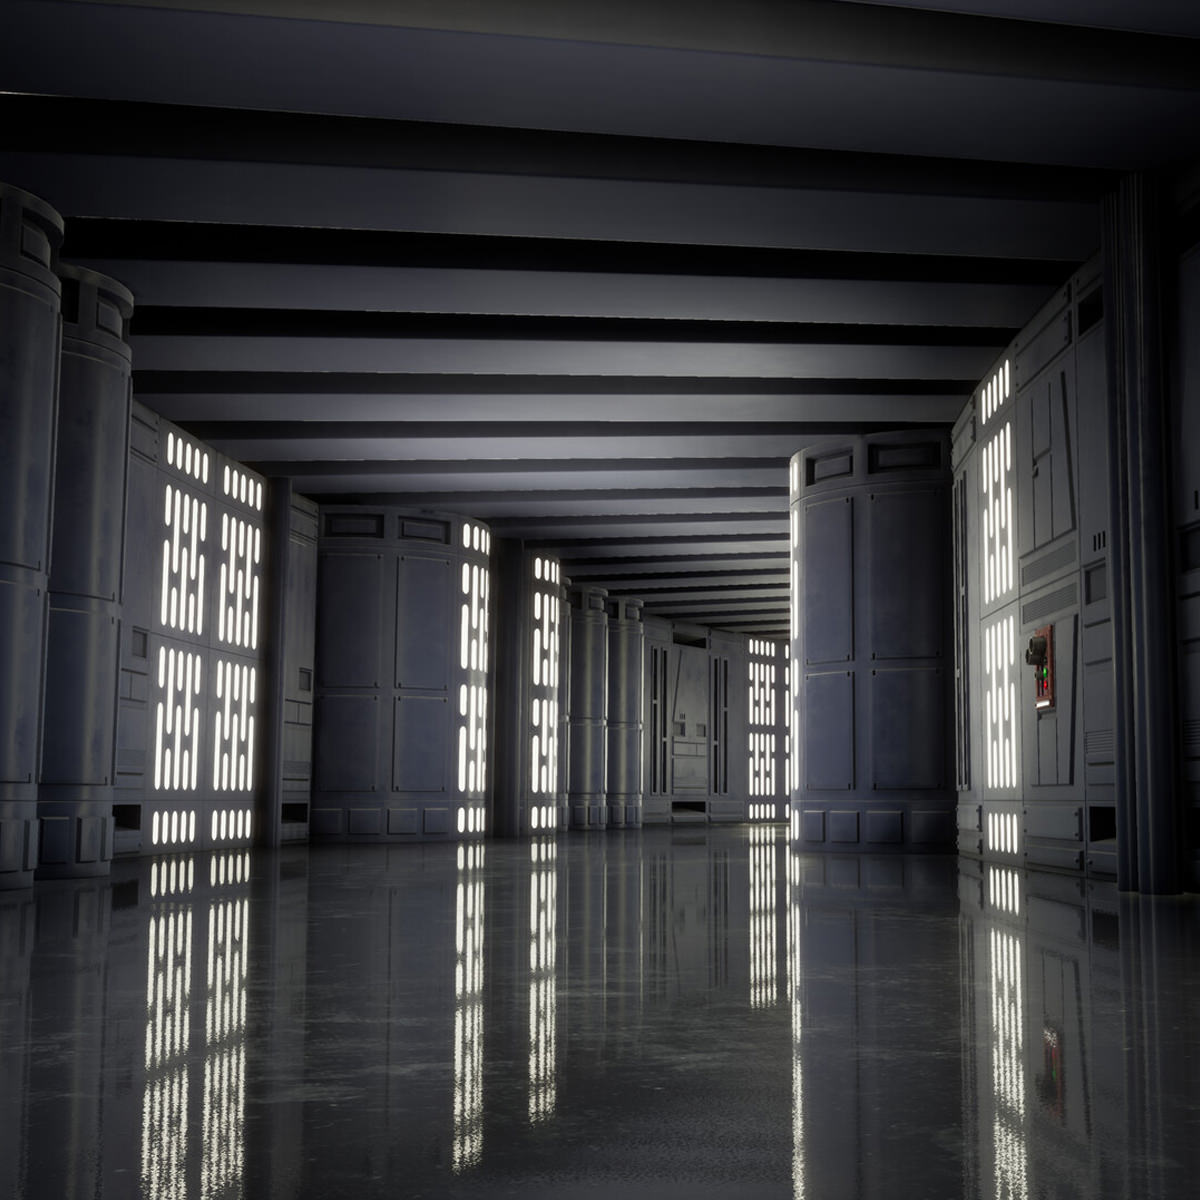 The Death Star Corridor